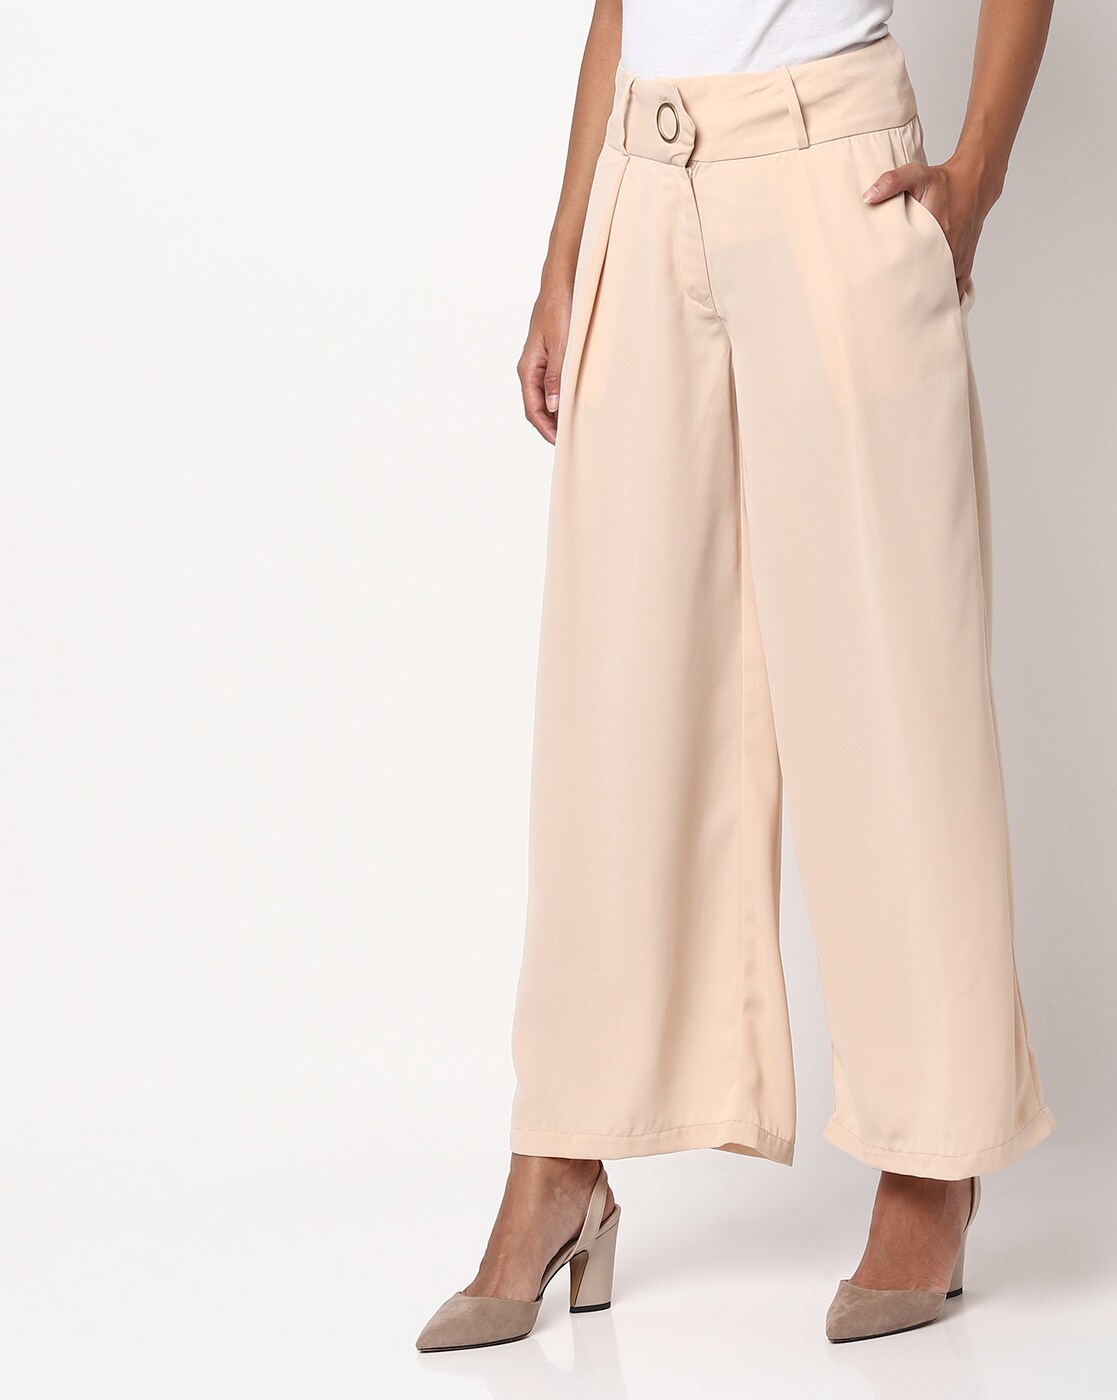 Buy Beige Trousers  Pants for Women by MADAME Online  Ajiocom